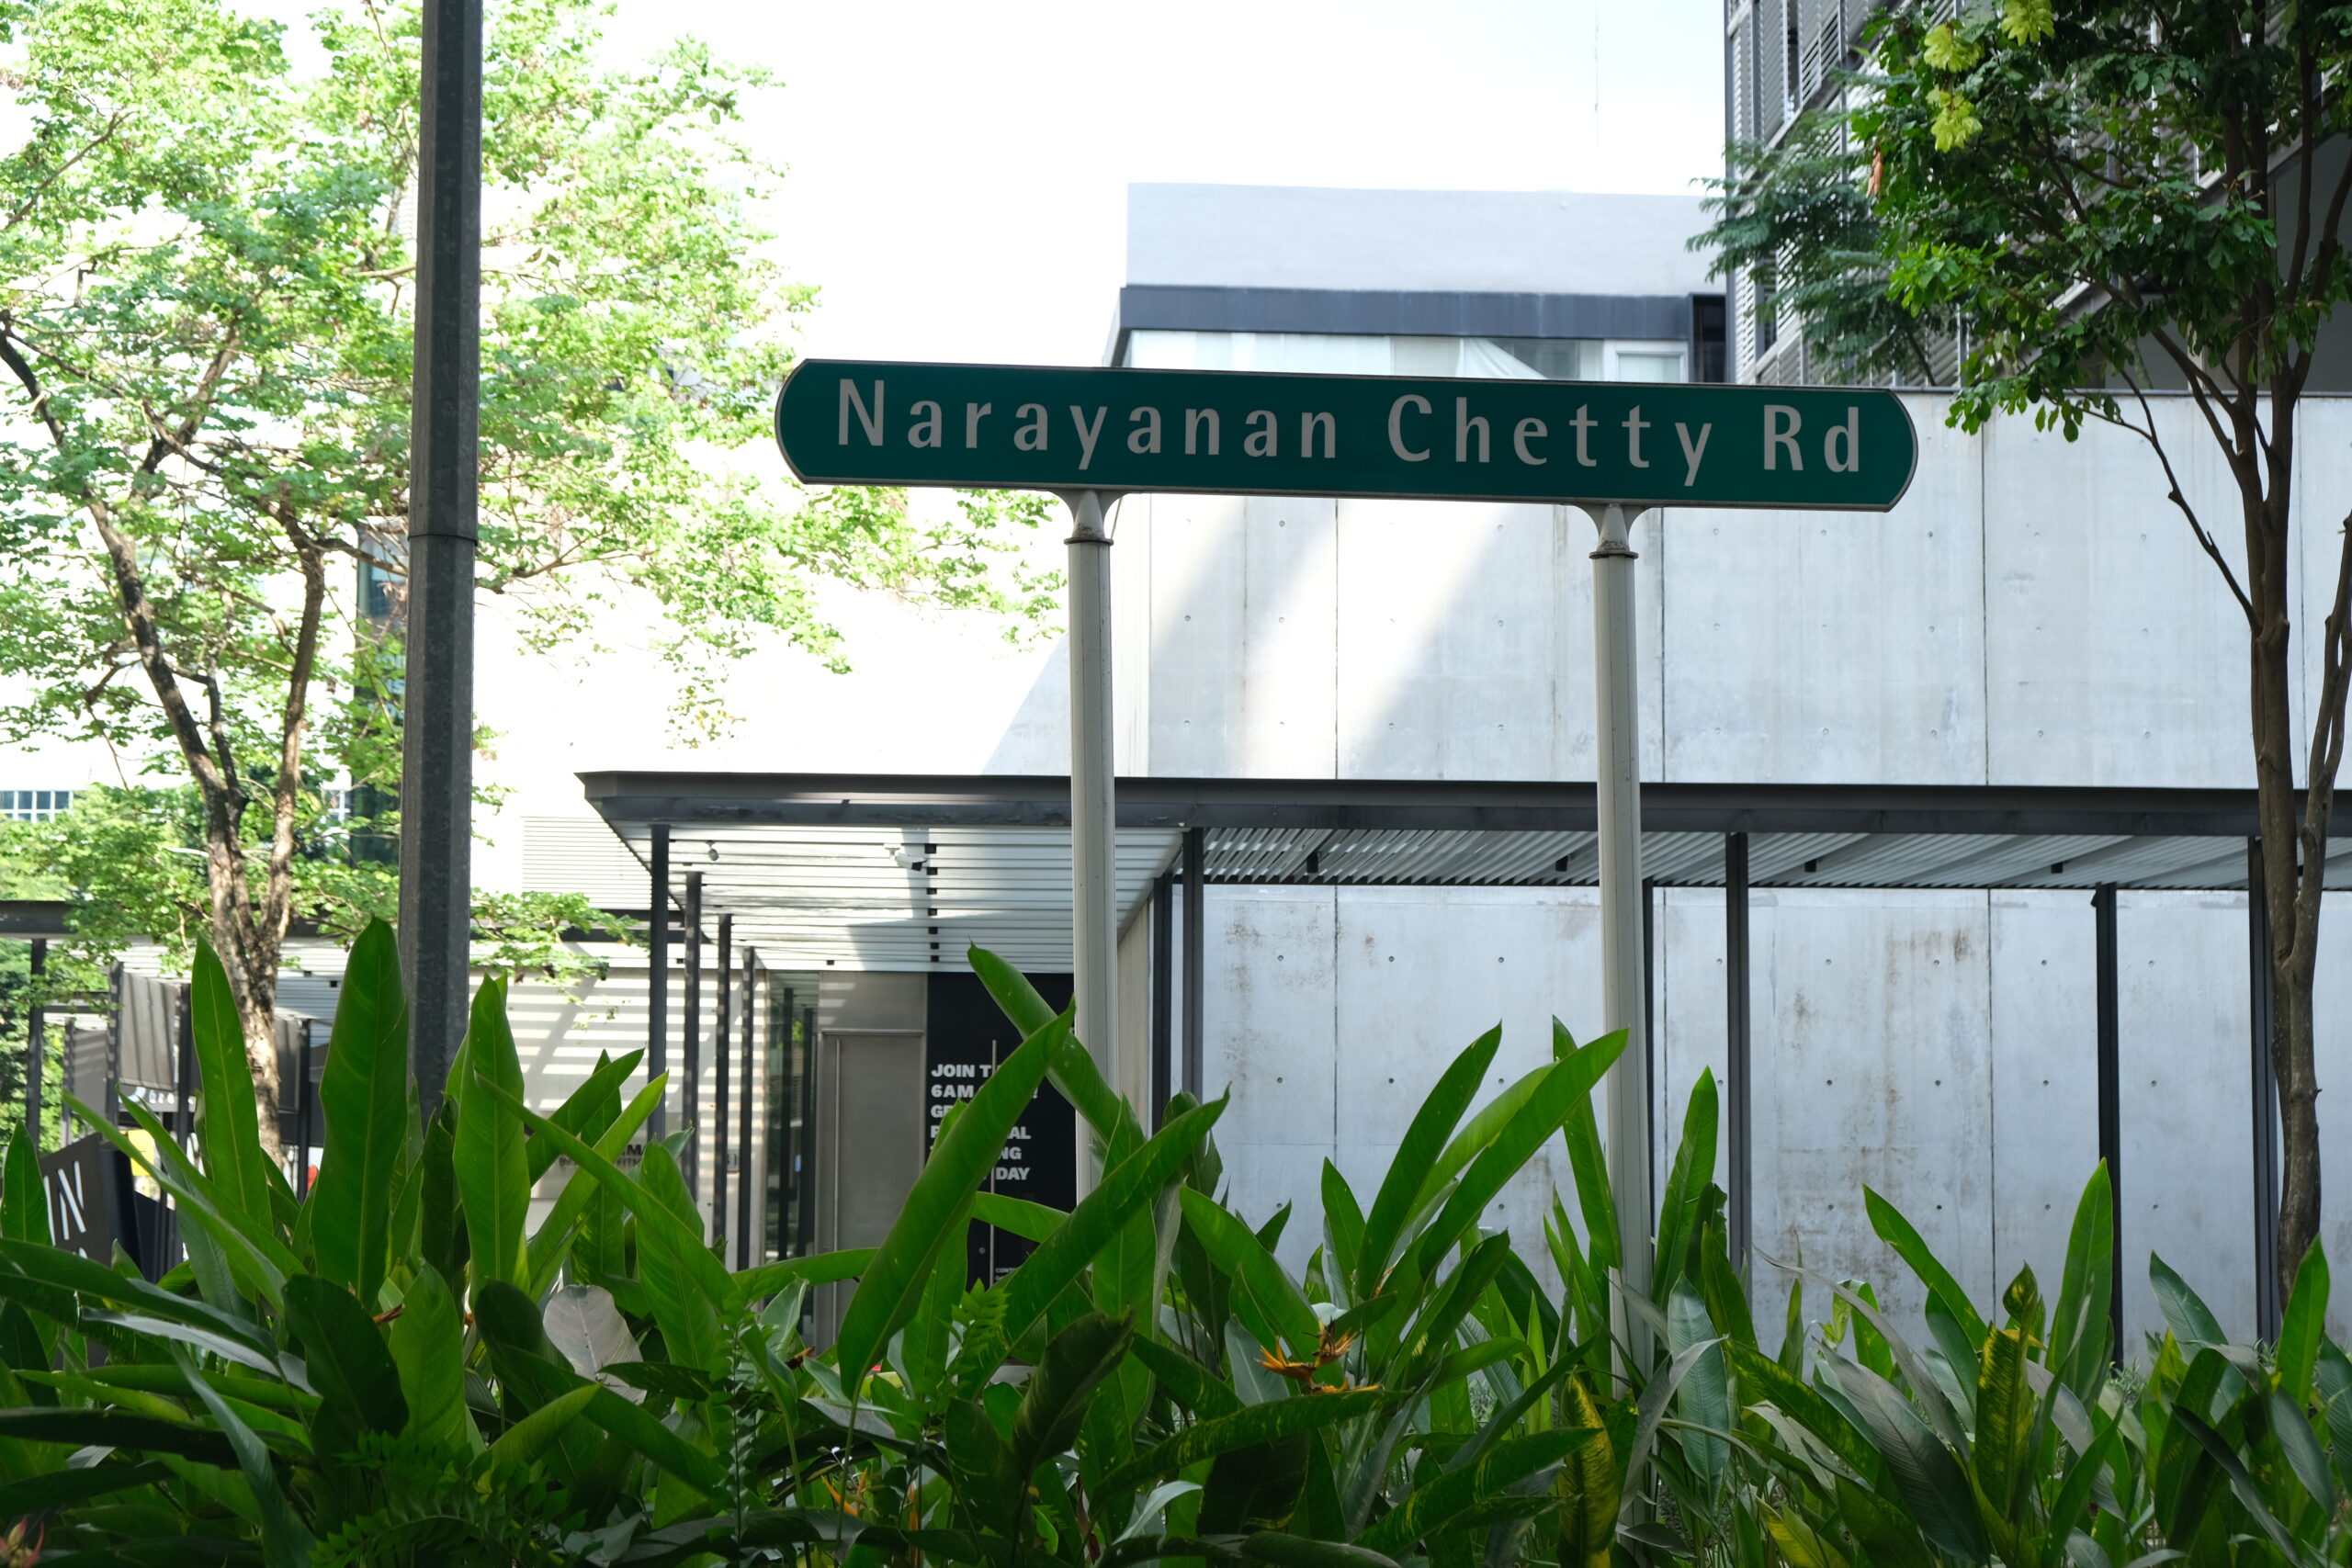 Indian Road Names Singapore